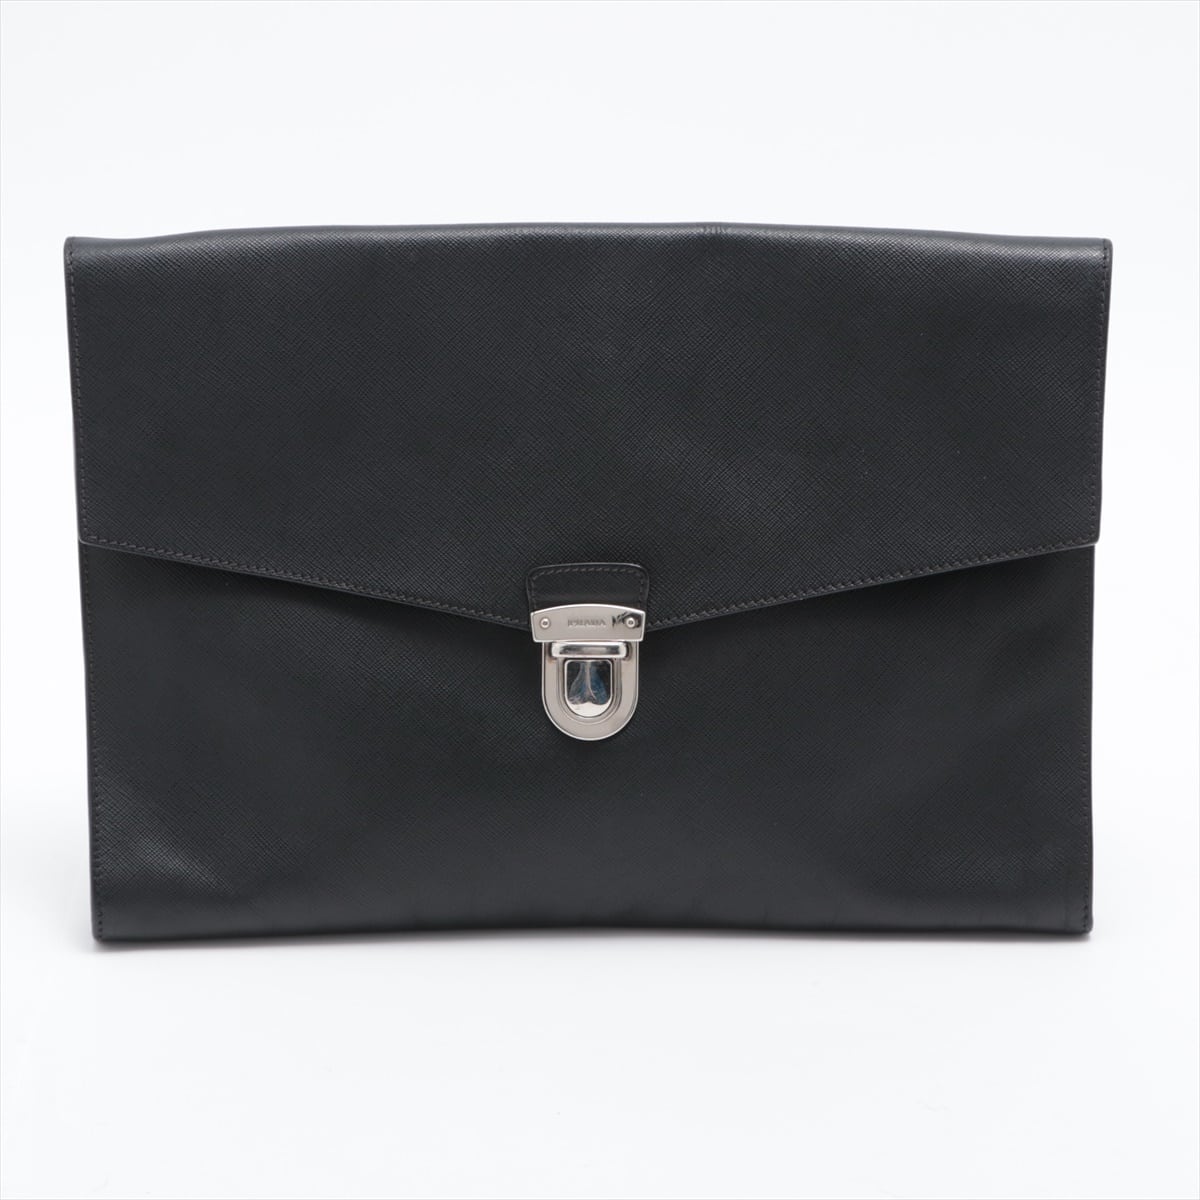 Prada Saffiano Leather Clutch Black